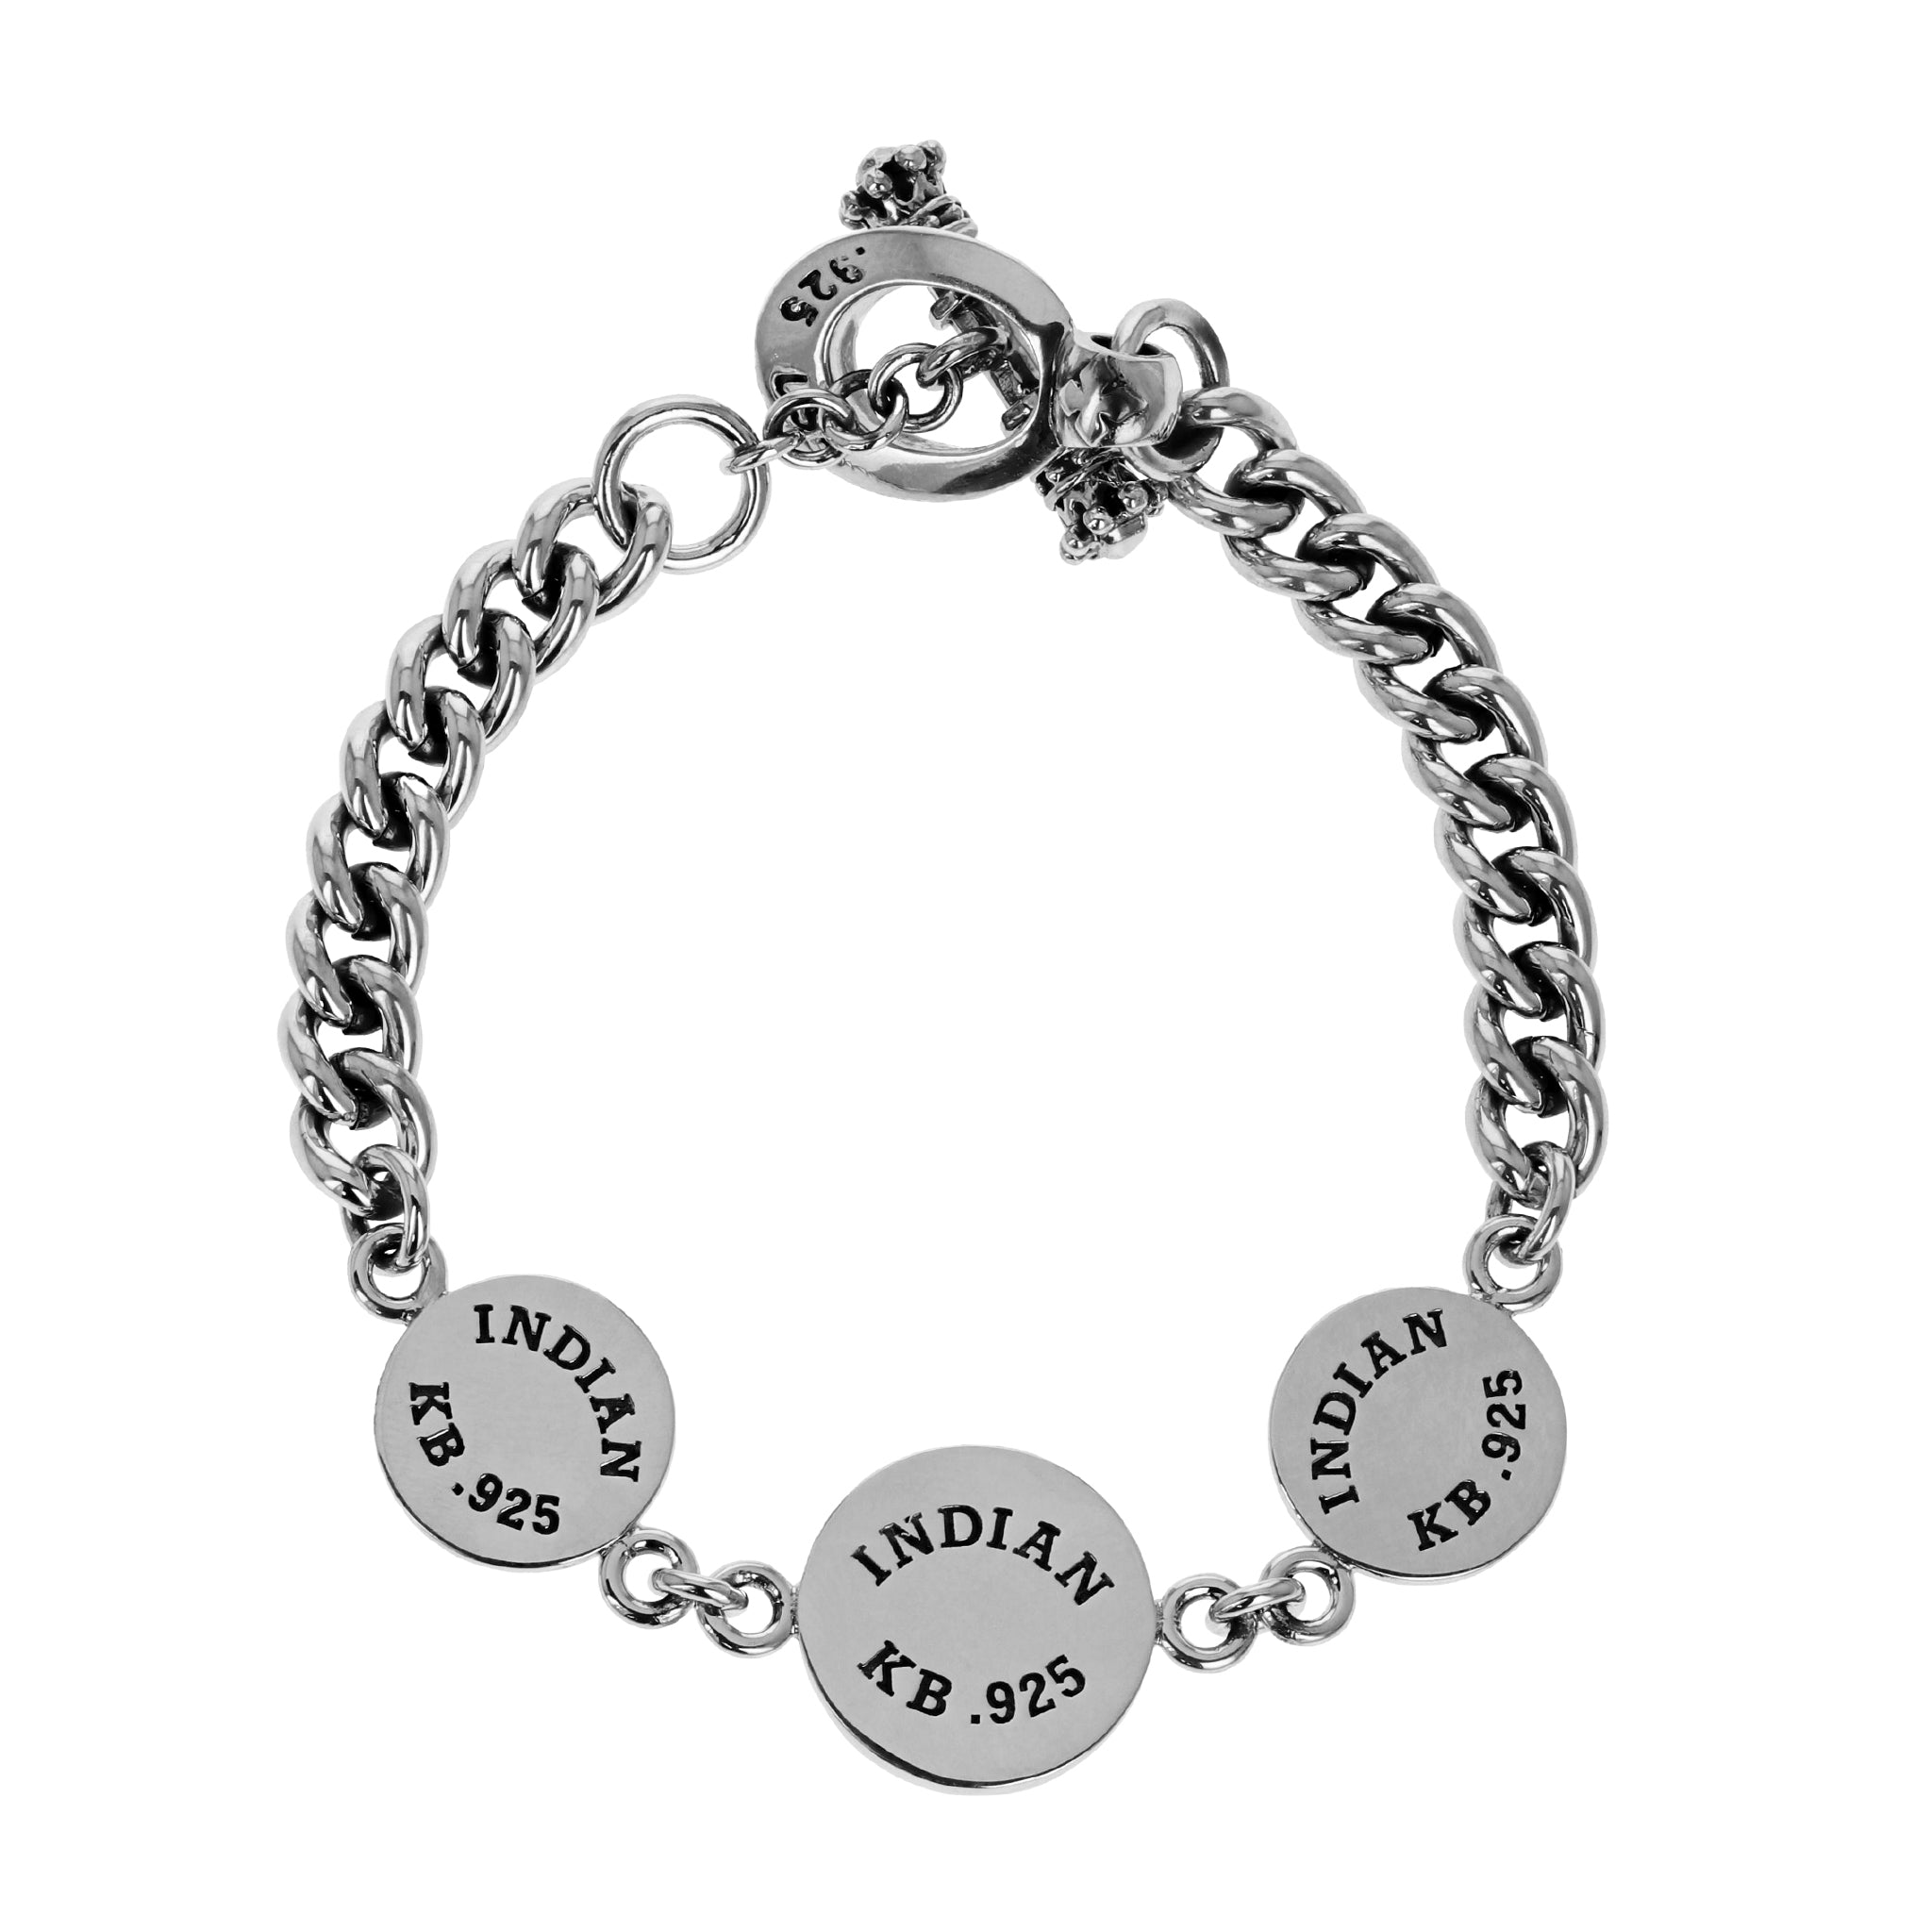 4gm LBV Sterling Silver Charm Bracelet for Kids